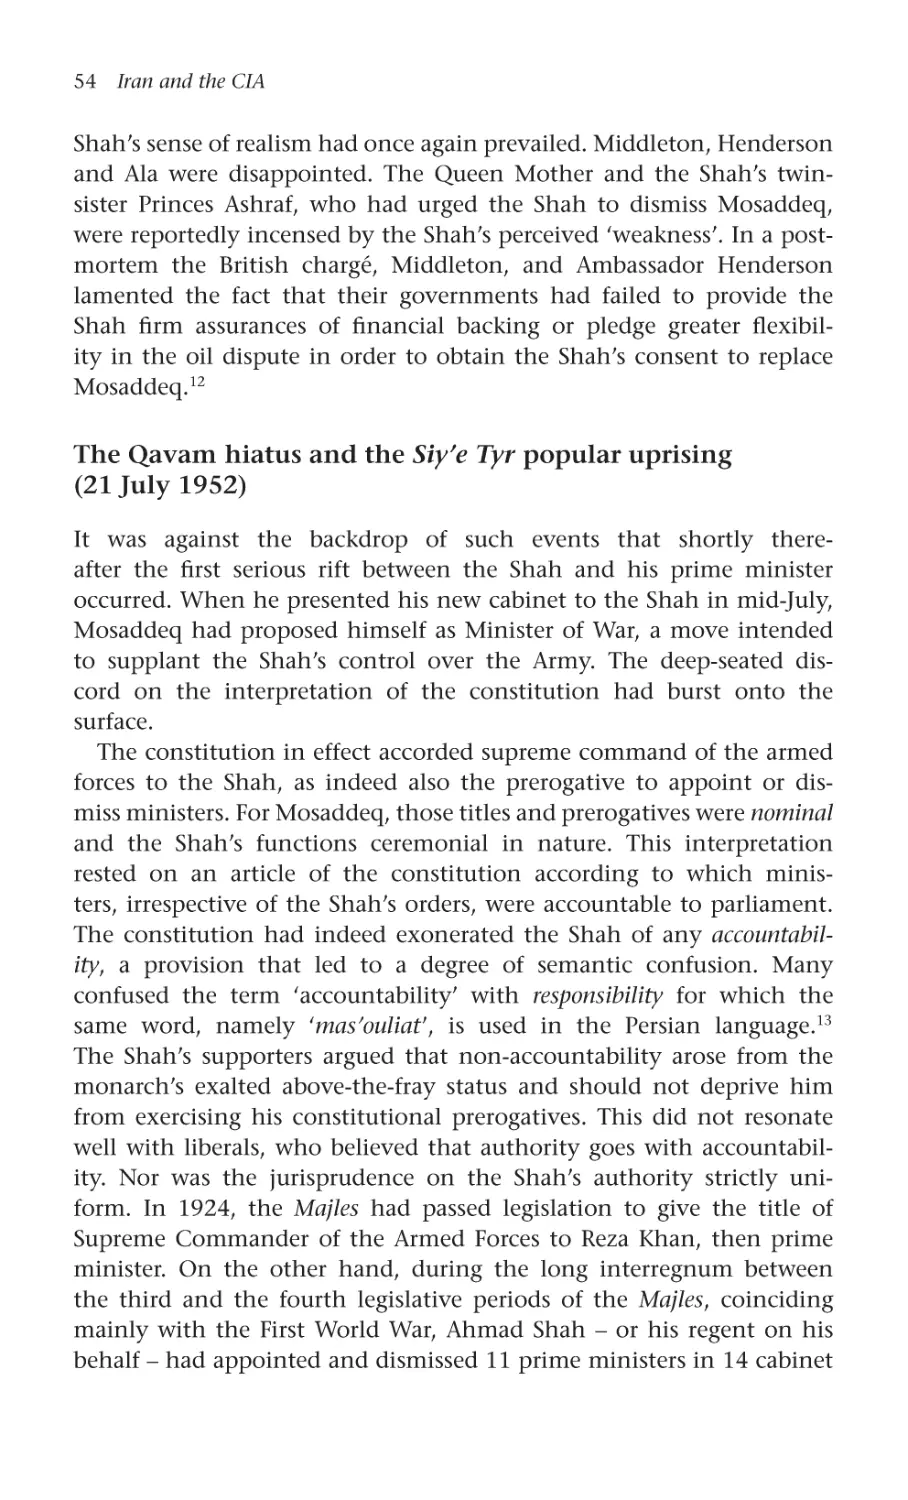 The Qavam hiatus and the Siy'e Tyr popular uprising (21 July 1952)